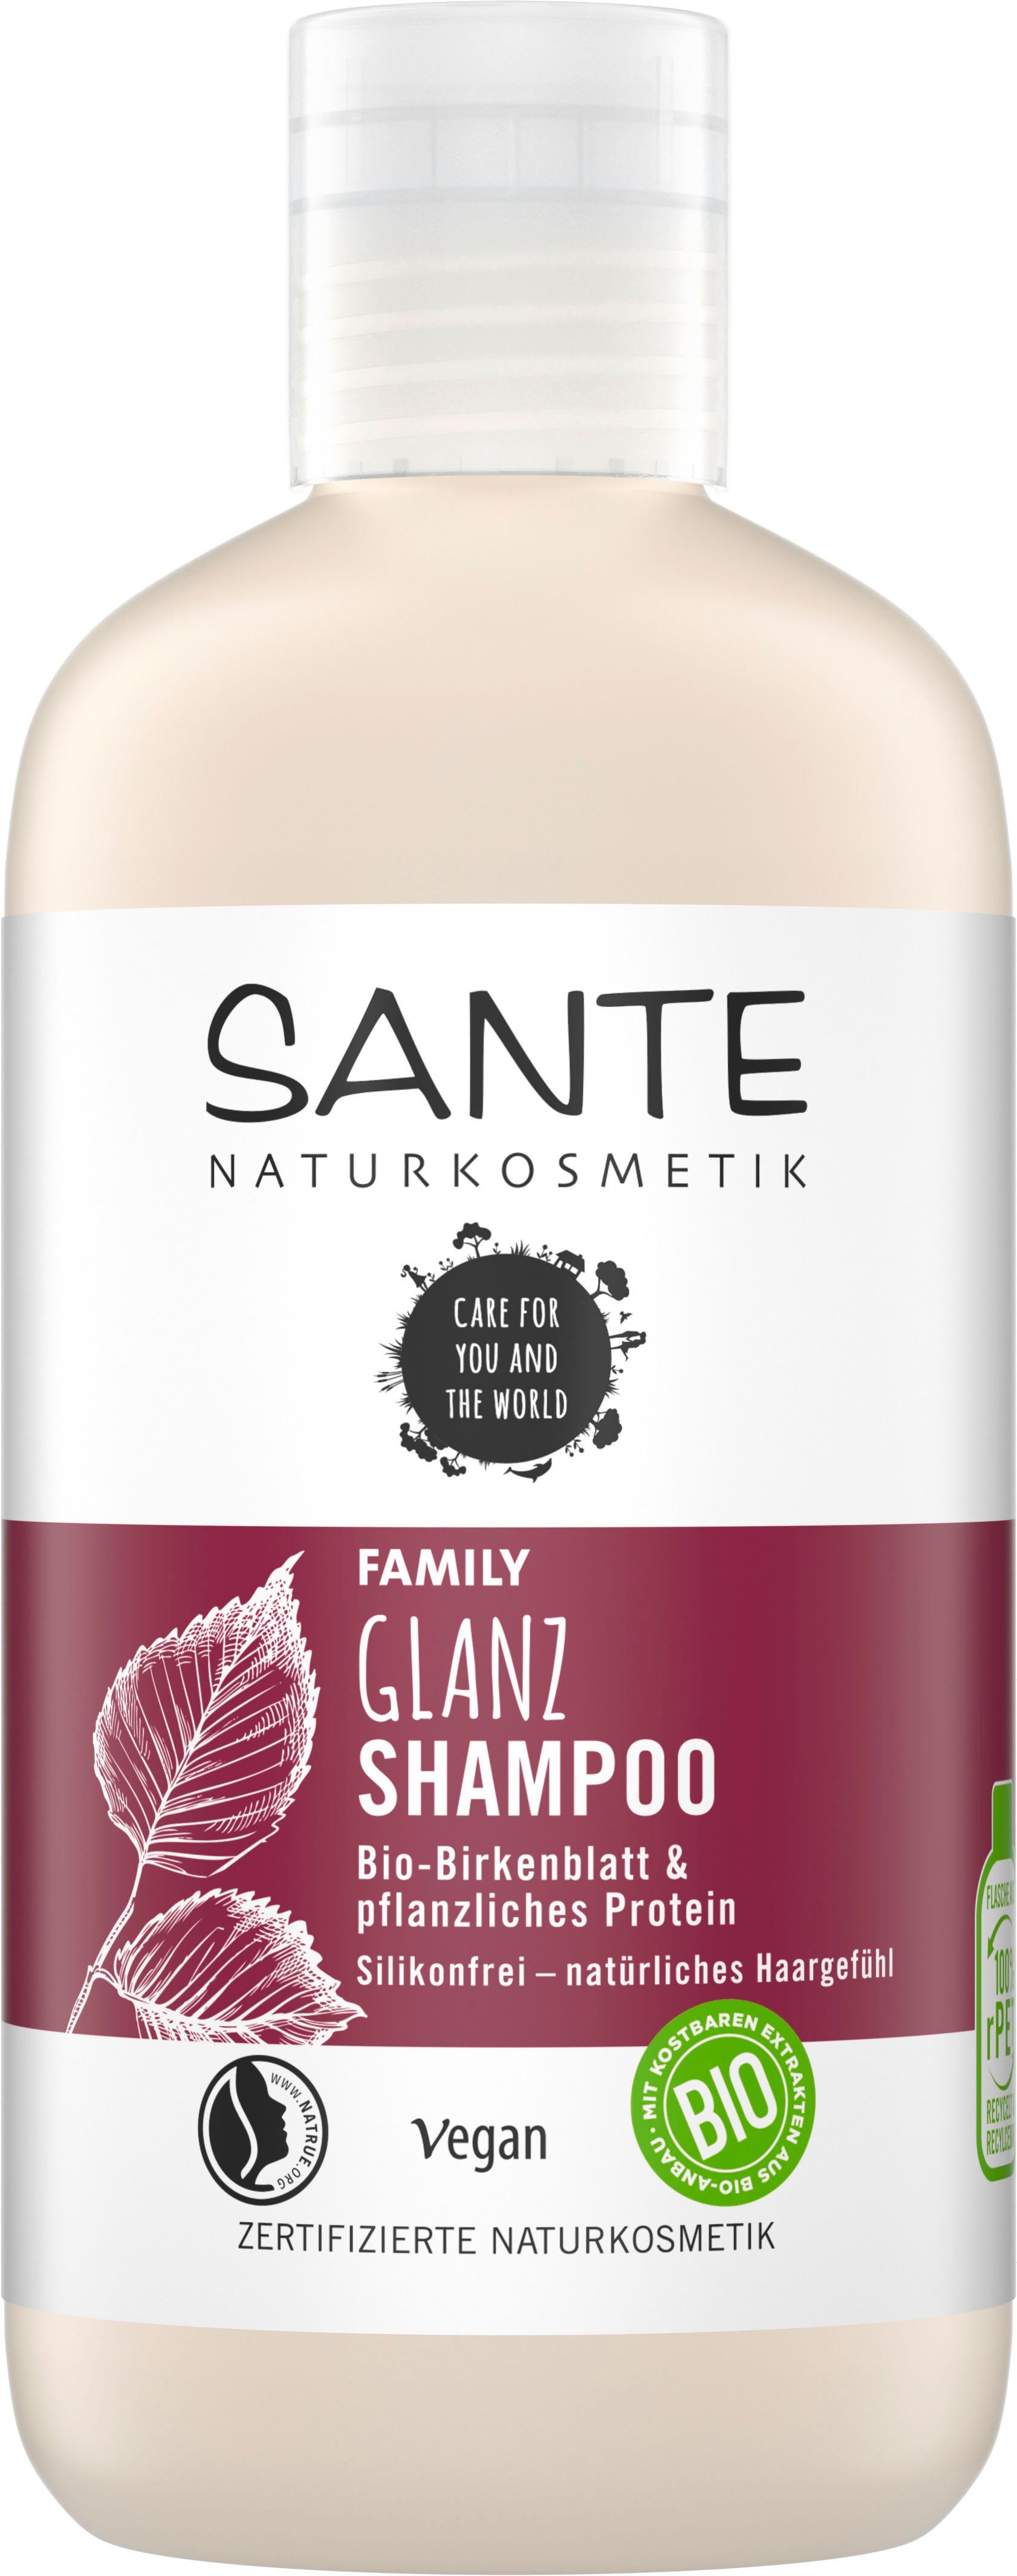 SANTE Haarshampoo FAMILY Glanz Shampoo | Haarshampoos